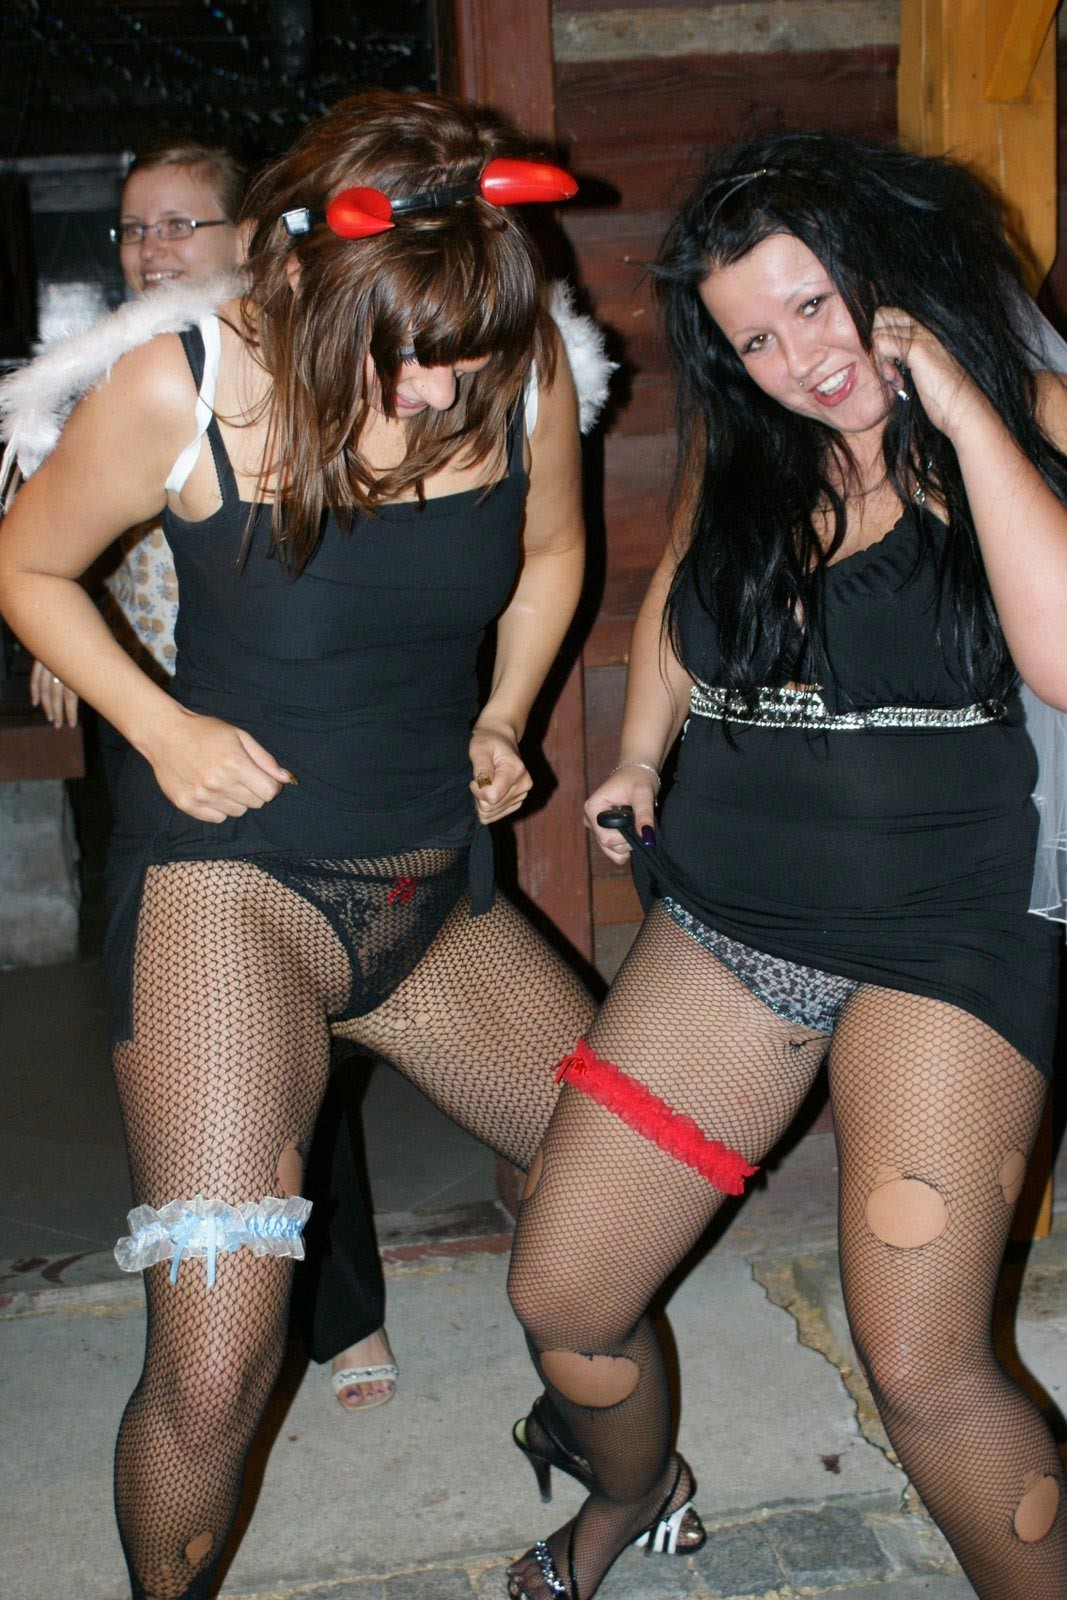 Drunk party girls upskirt no panties